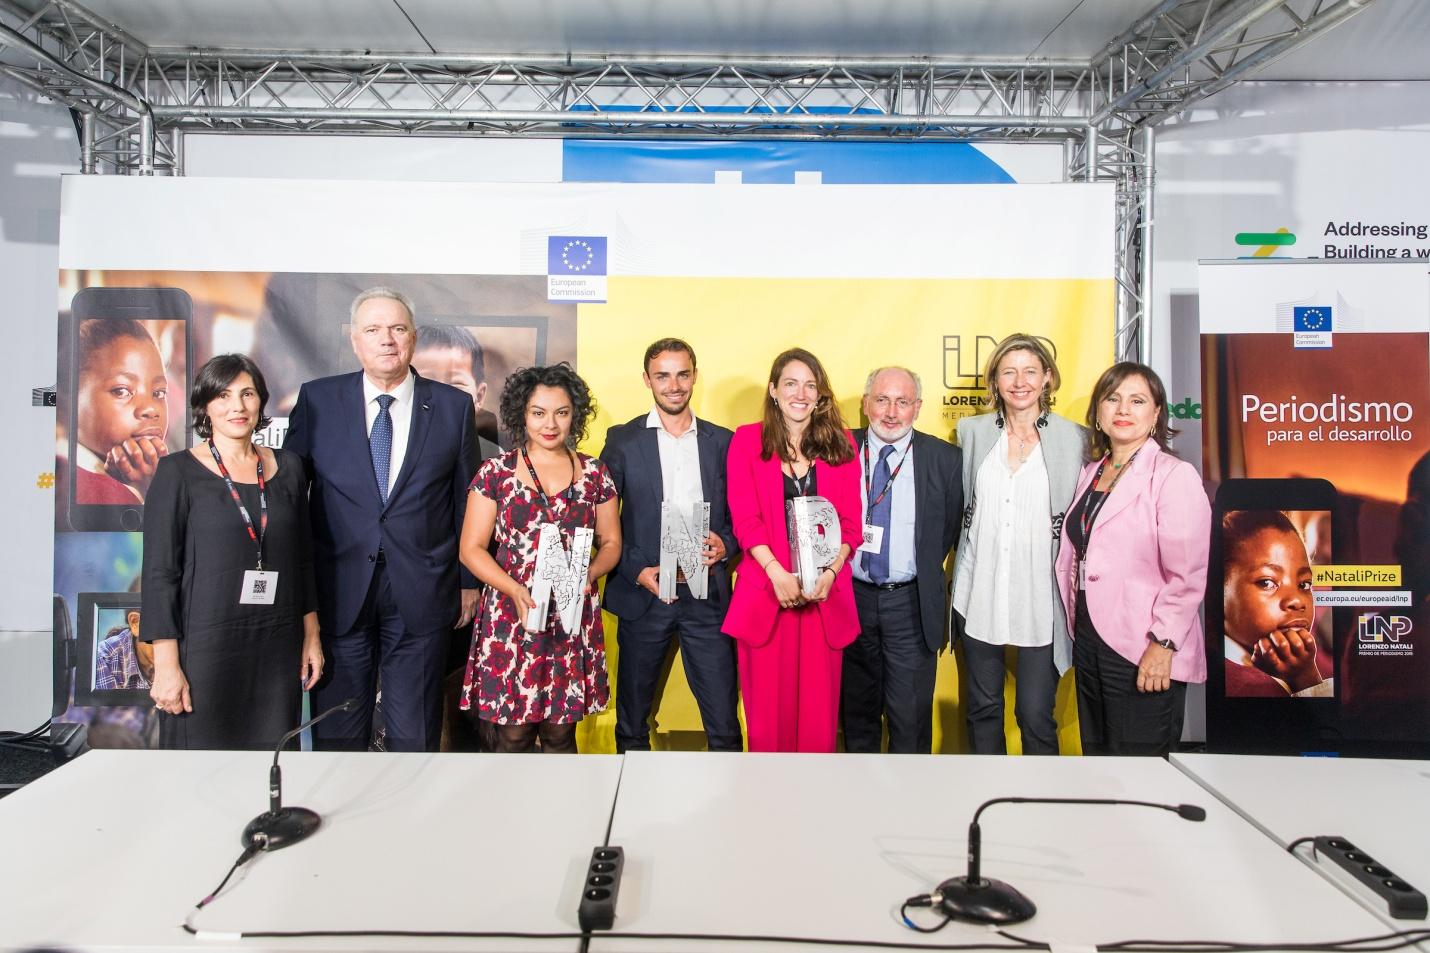 Lorenzo Natali Media Prize 2019: Winners Of Eu’s Development Journalism Award Unveiled